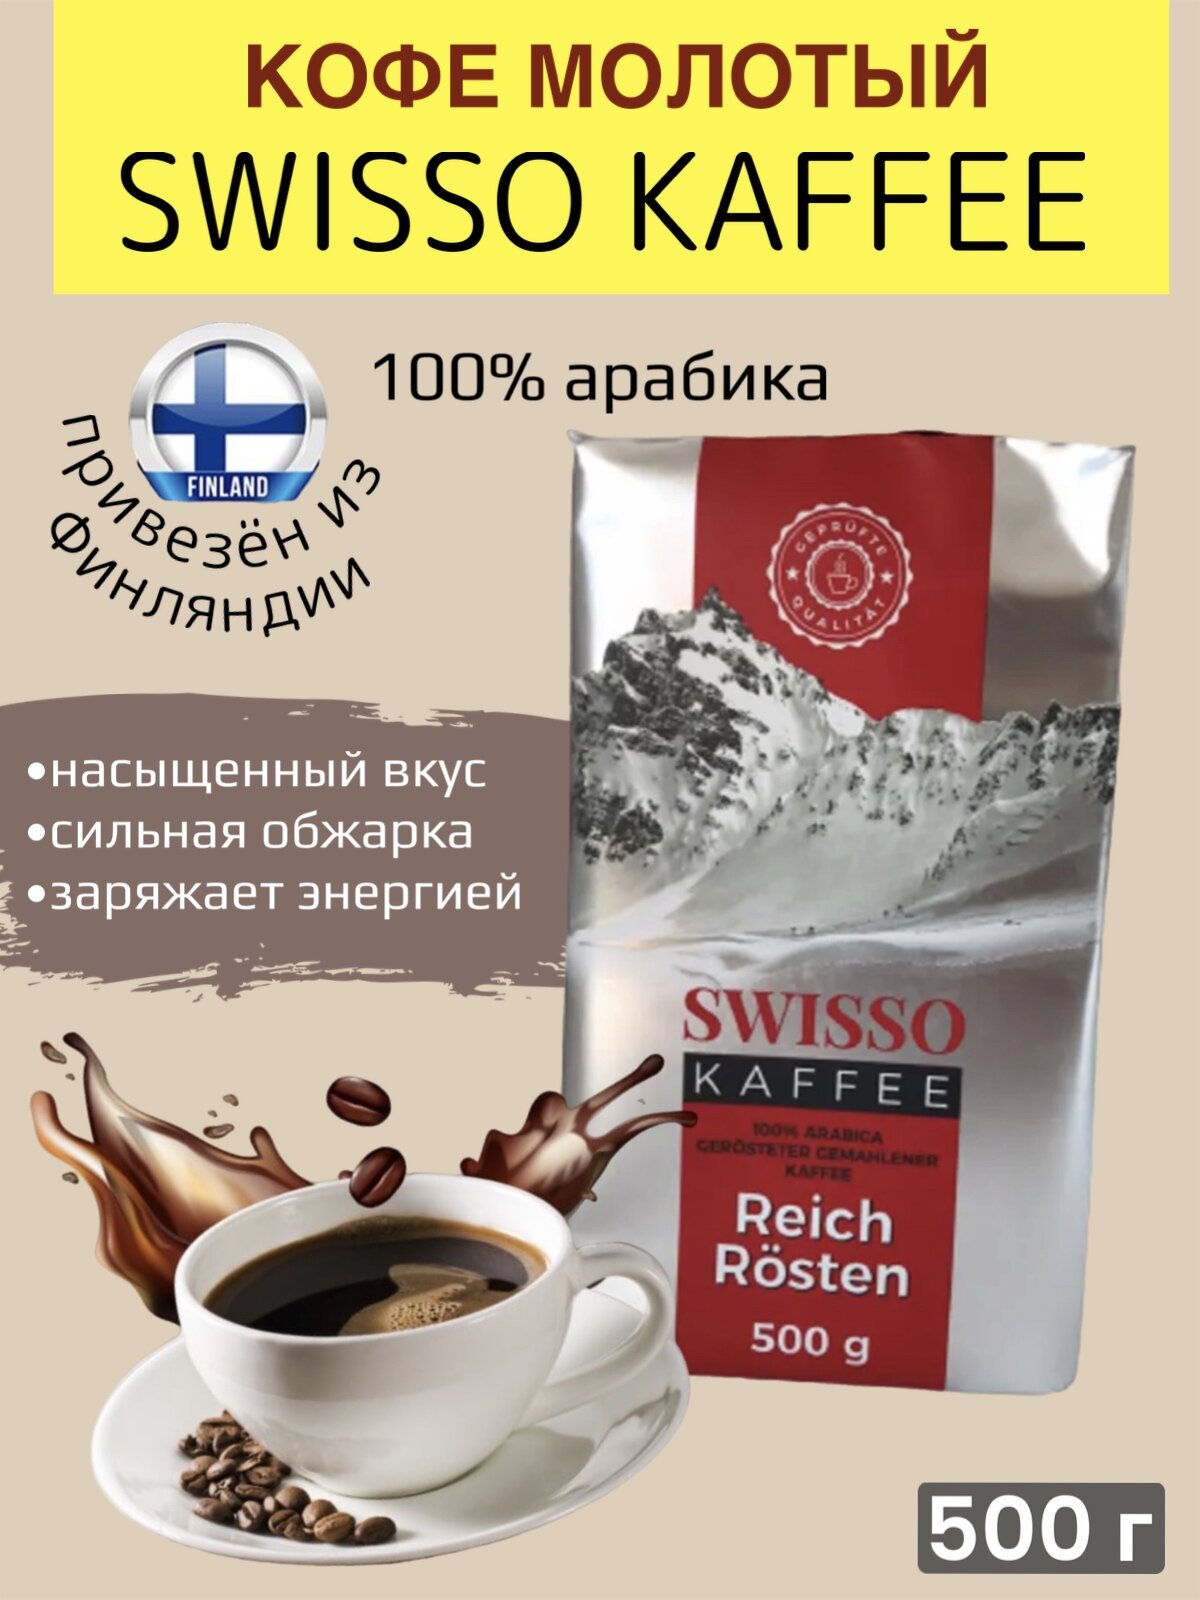 Кофе молотый 100% арабика натуральный 500 г Swisso Kaffee, из Финляндии